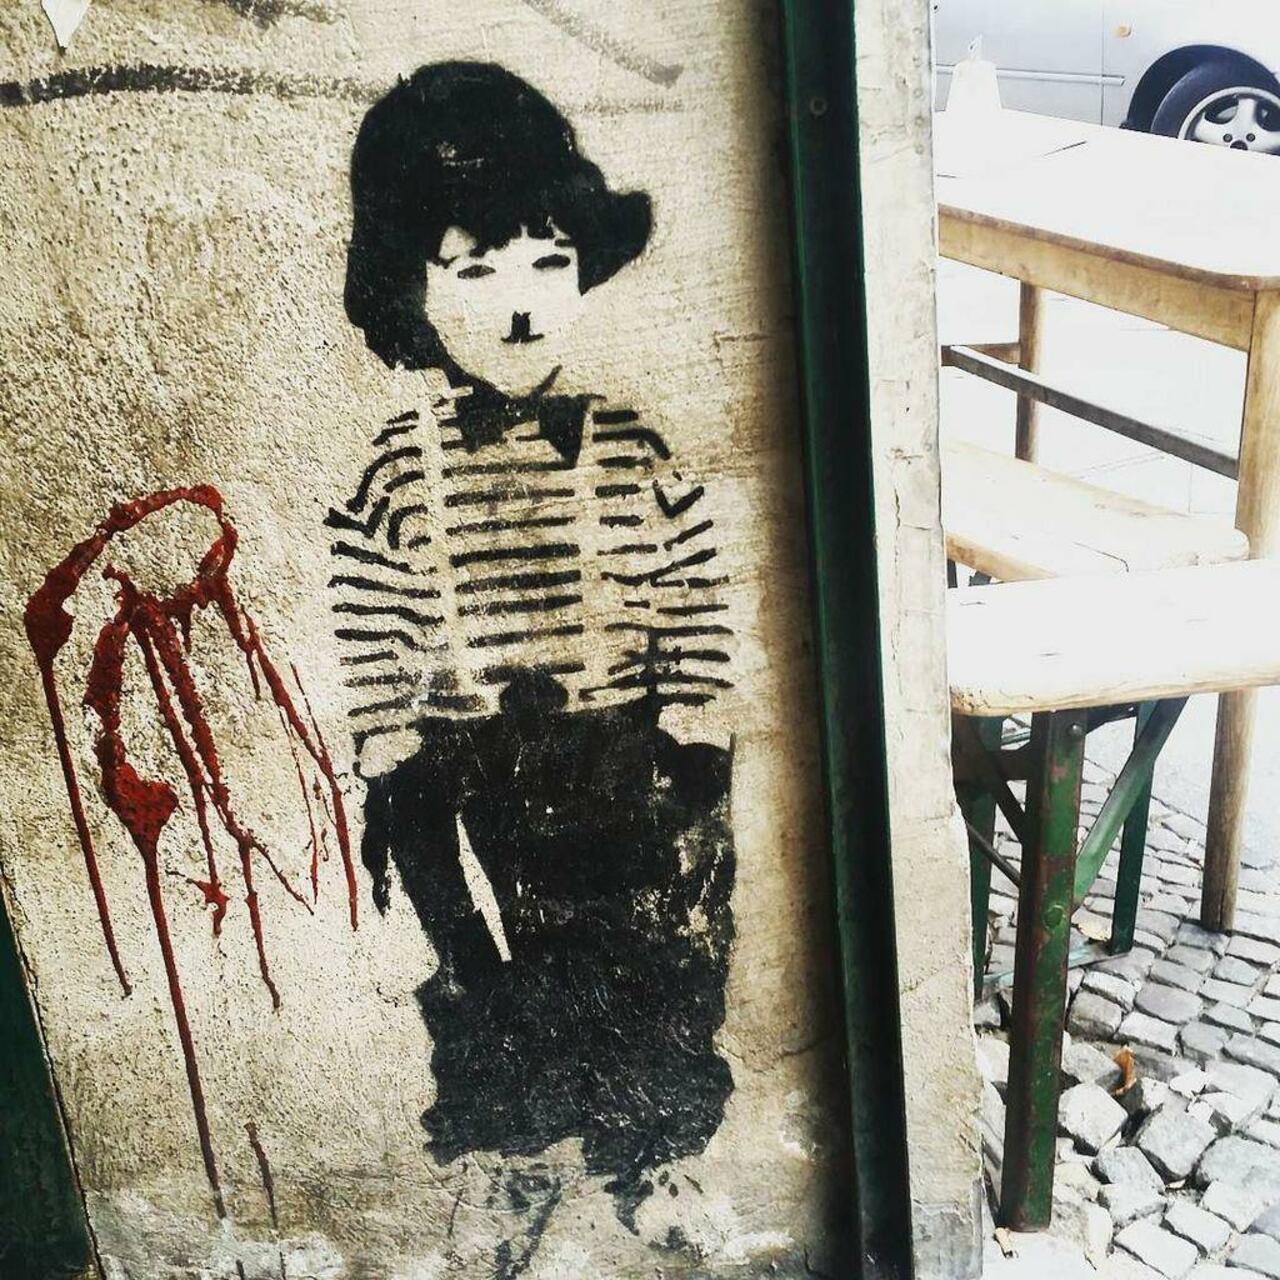 Mini Charlie chaplin.
#Graffiti #instadaily #instaphoto #streetart #streetartberlin #Berlin #Germany #streetartphot… http://t.co/EzGeN9Jblh